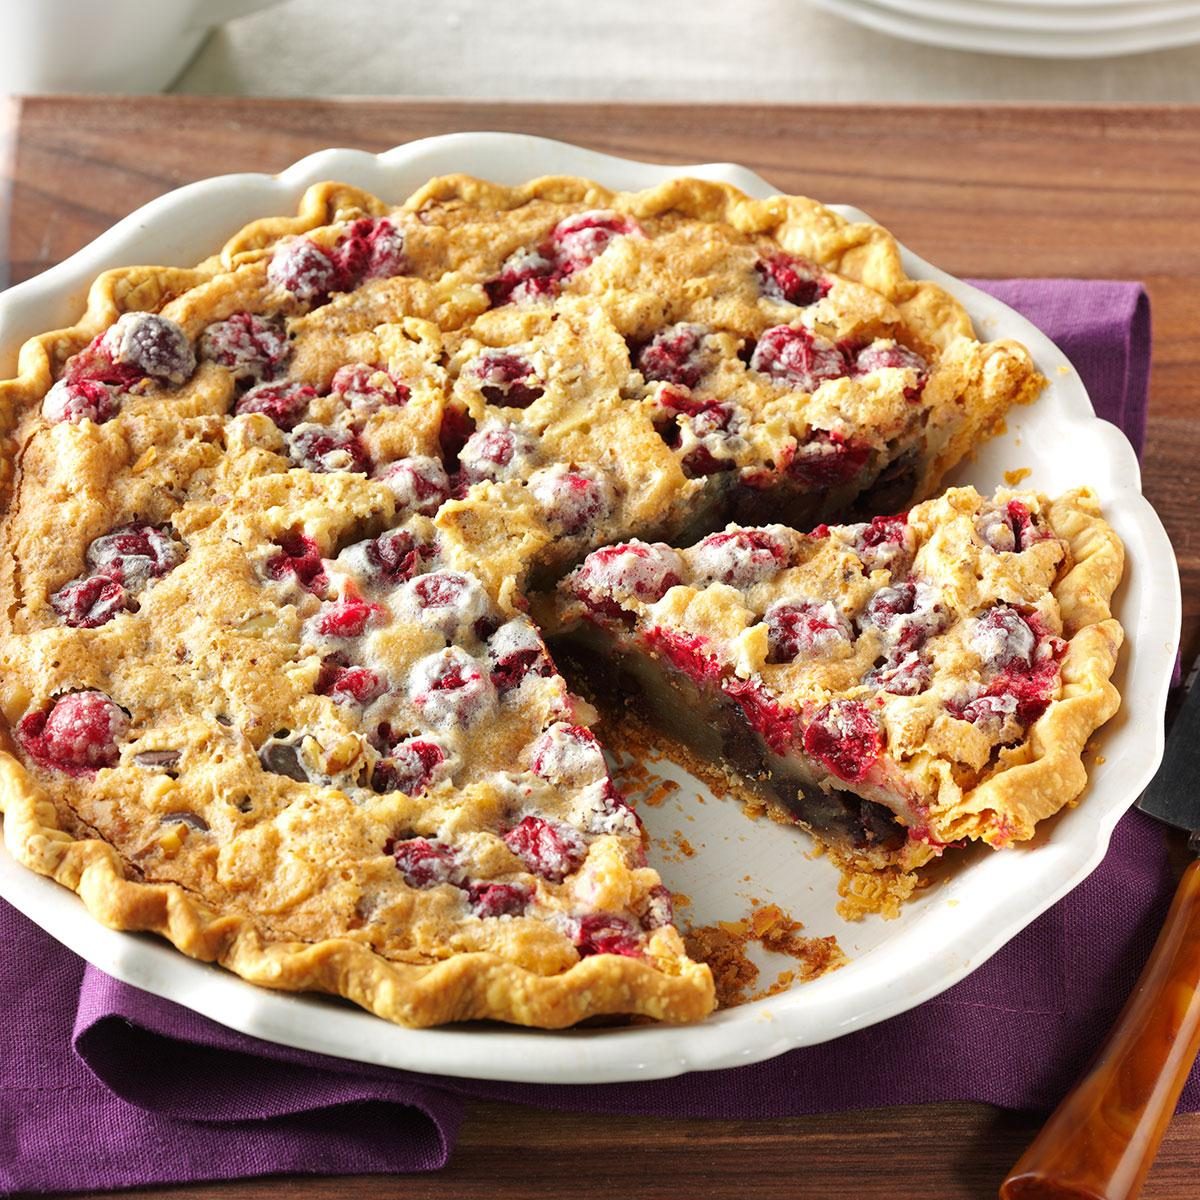 Cranberry Chocolate Walnut Pie Recipe: How to Make It